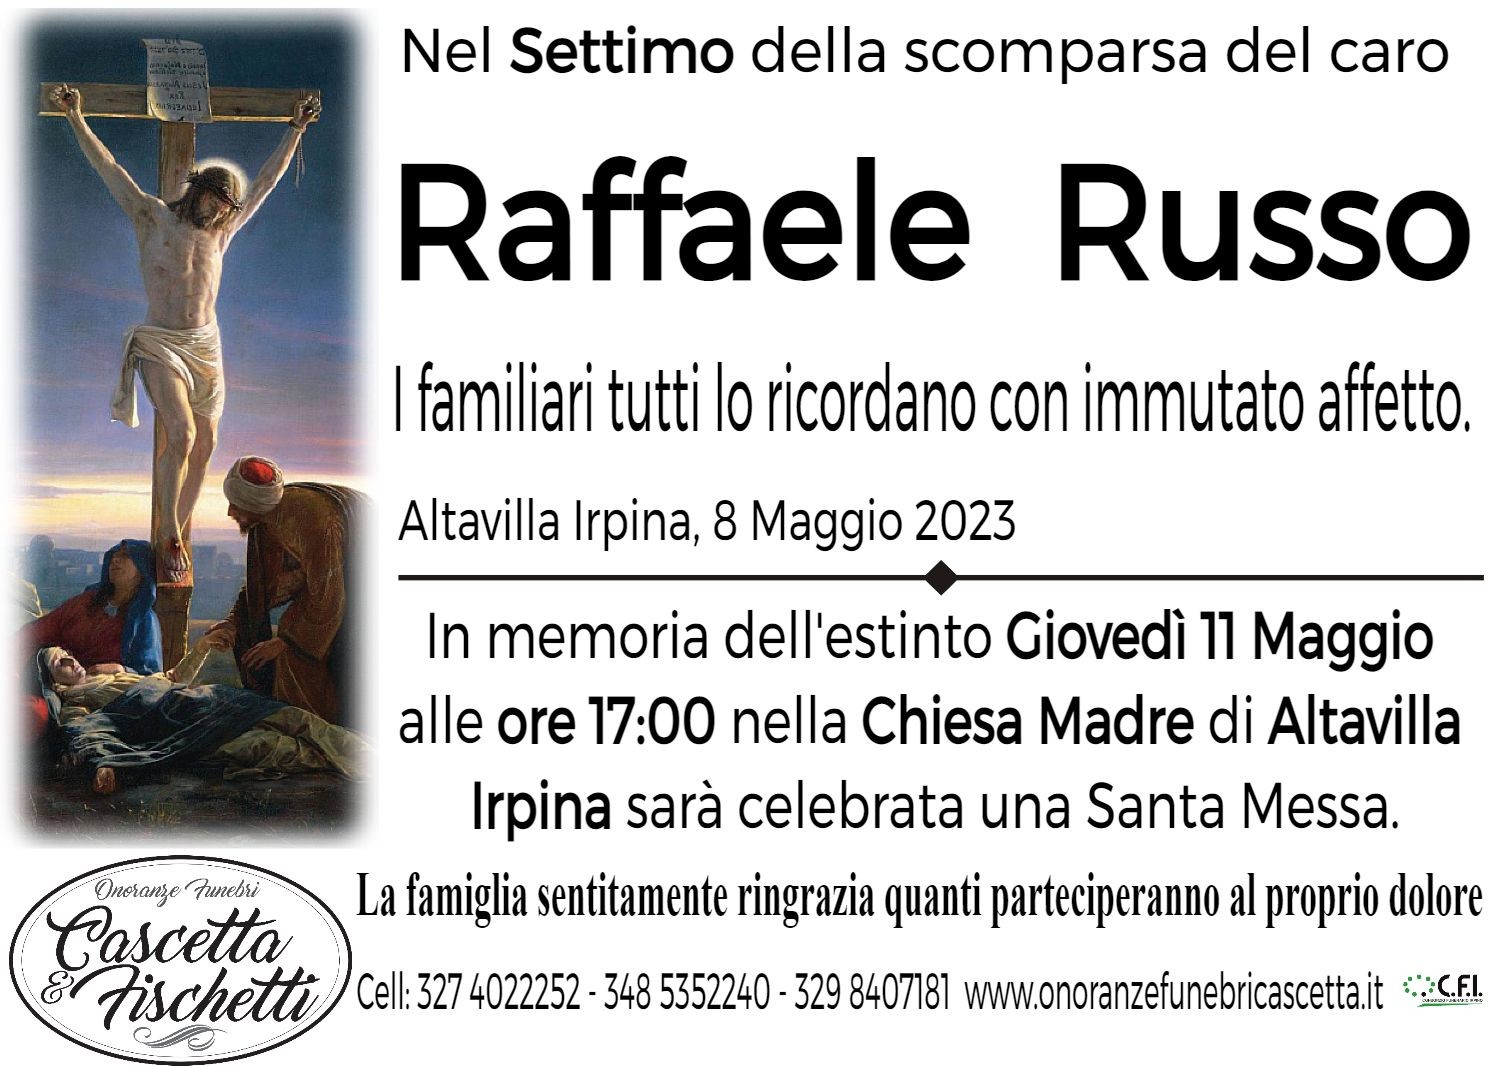 Raffaele Russo